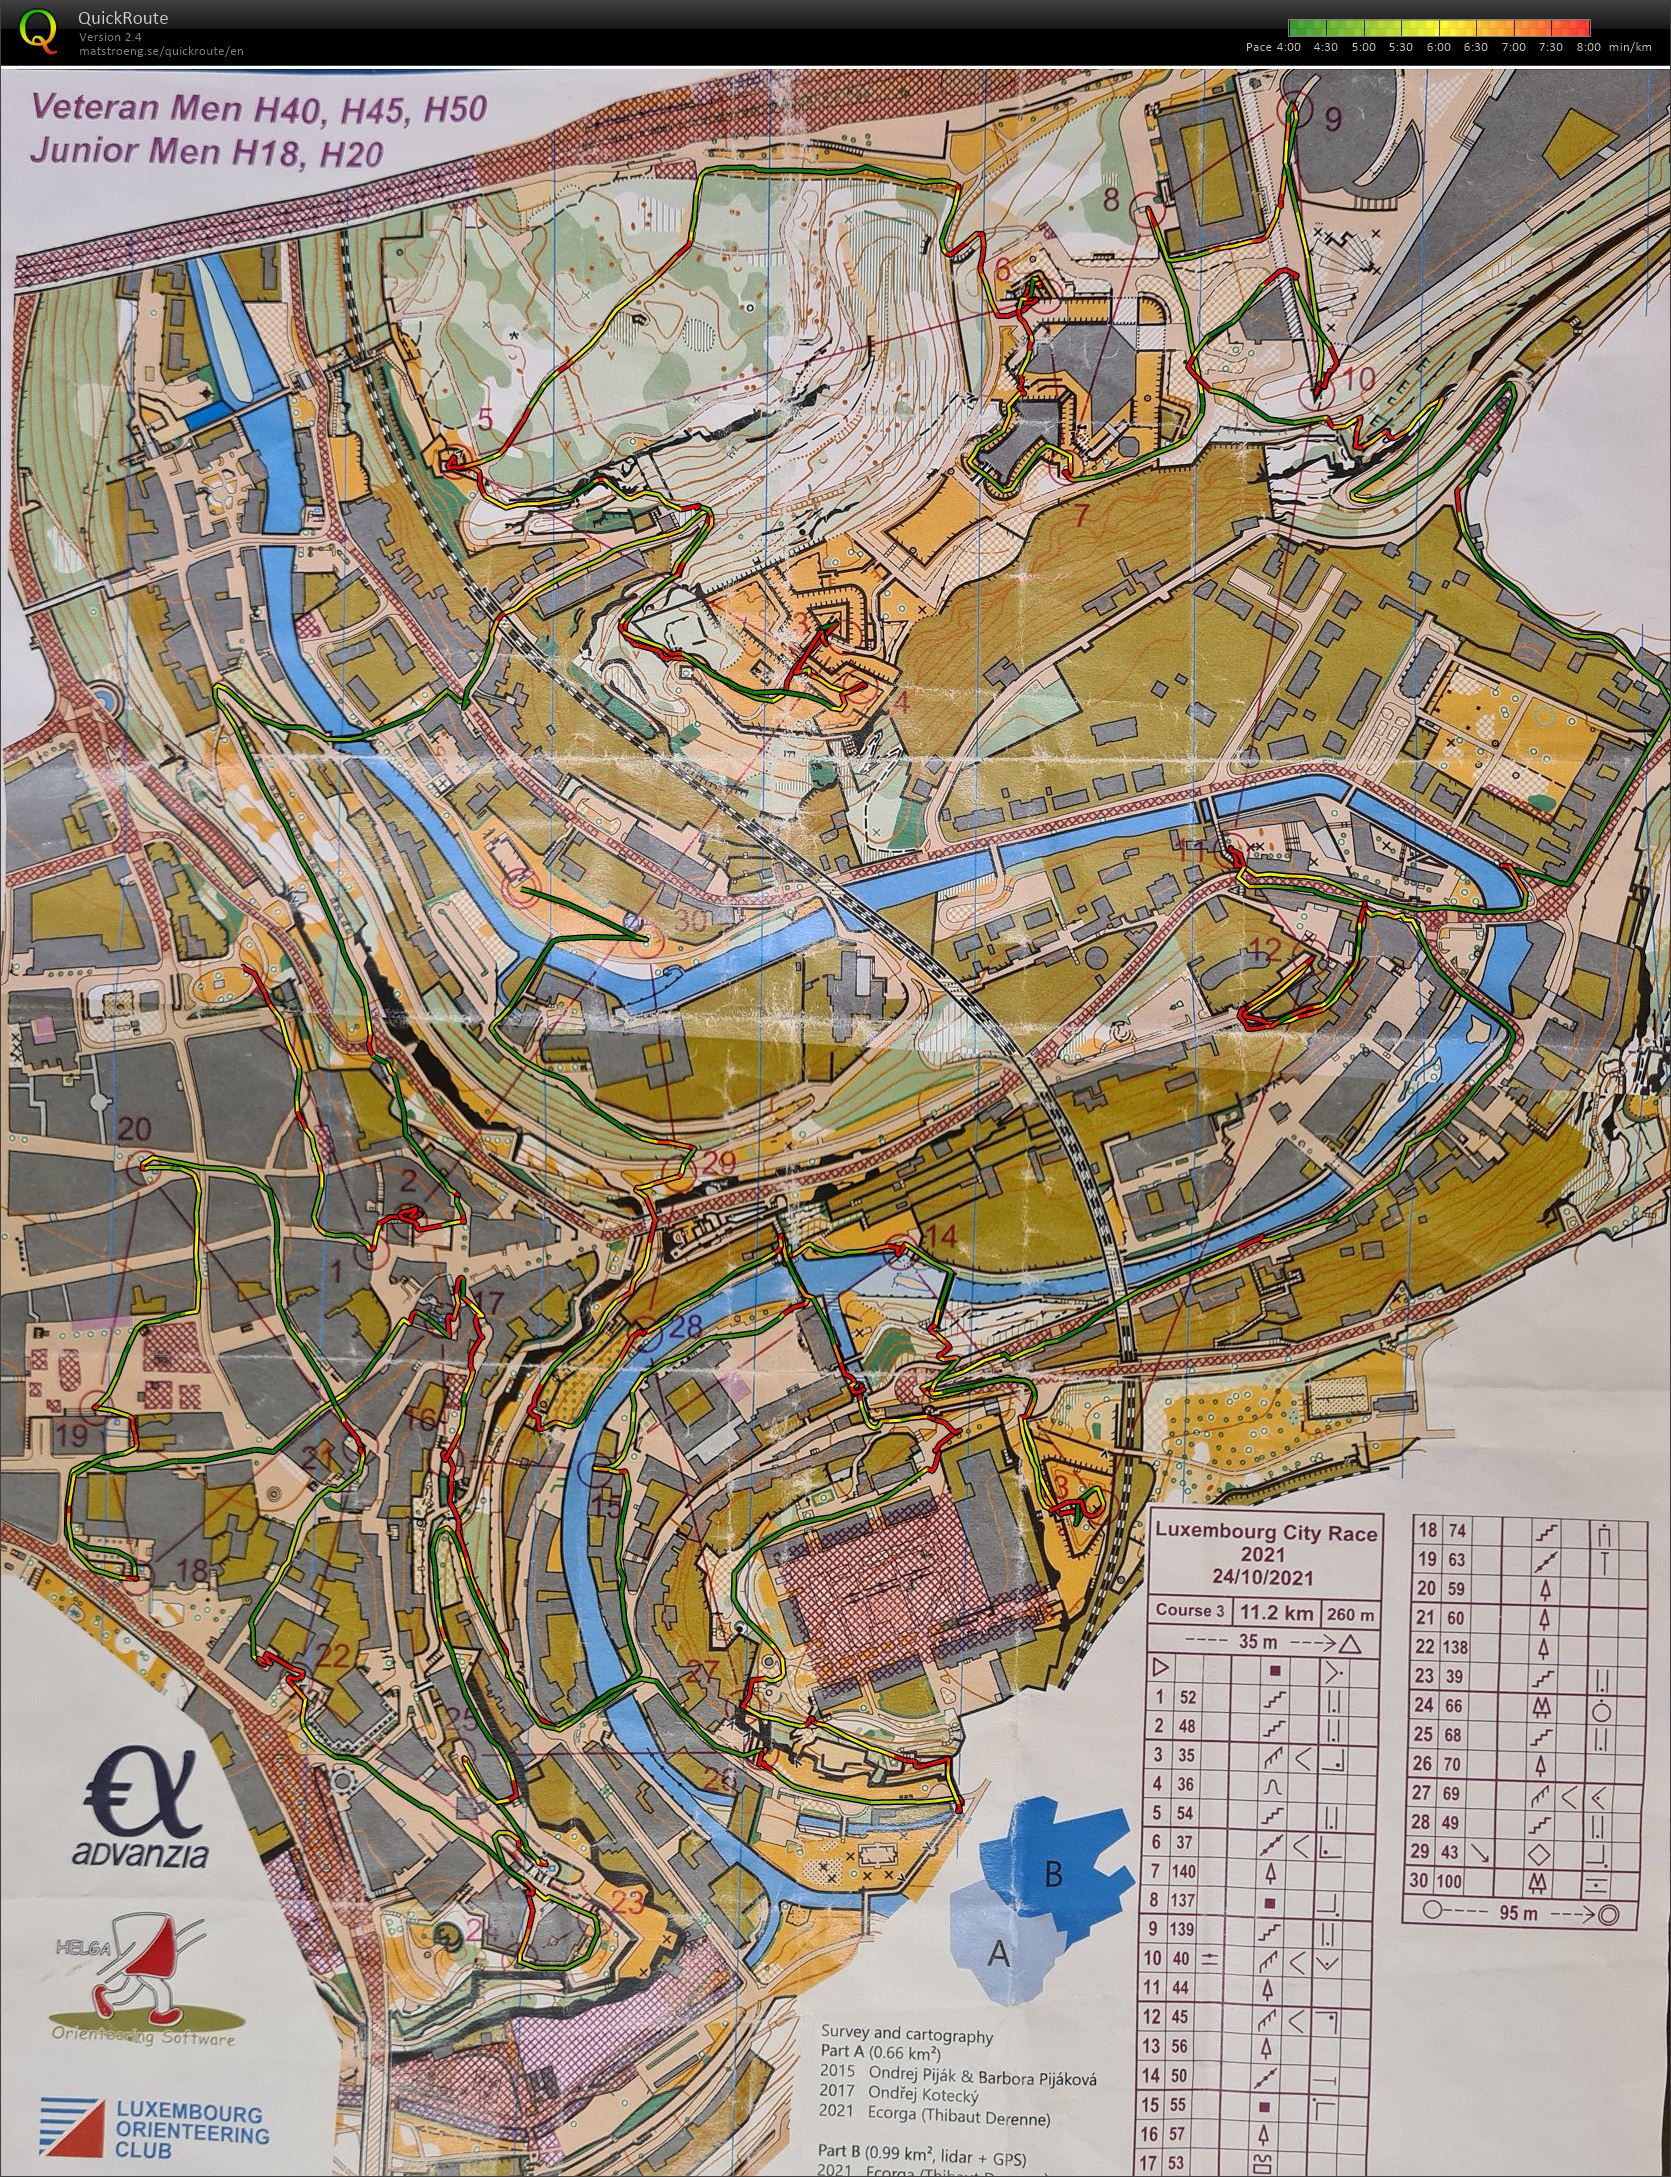 Luxemburg City Race, Long, M50 (24-10-2021)